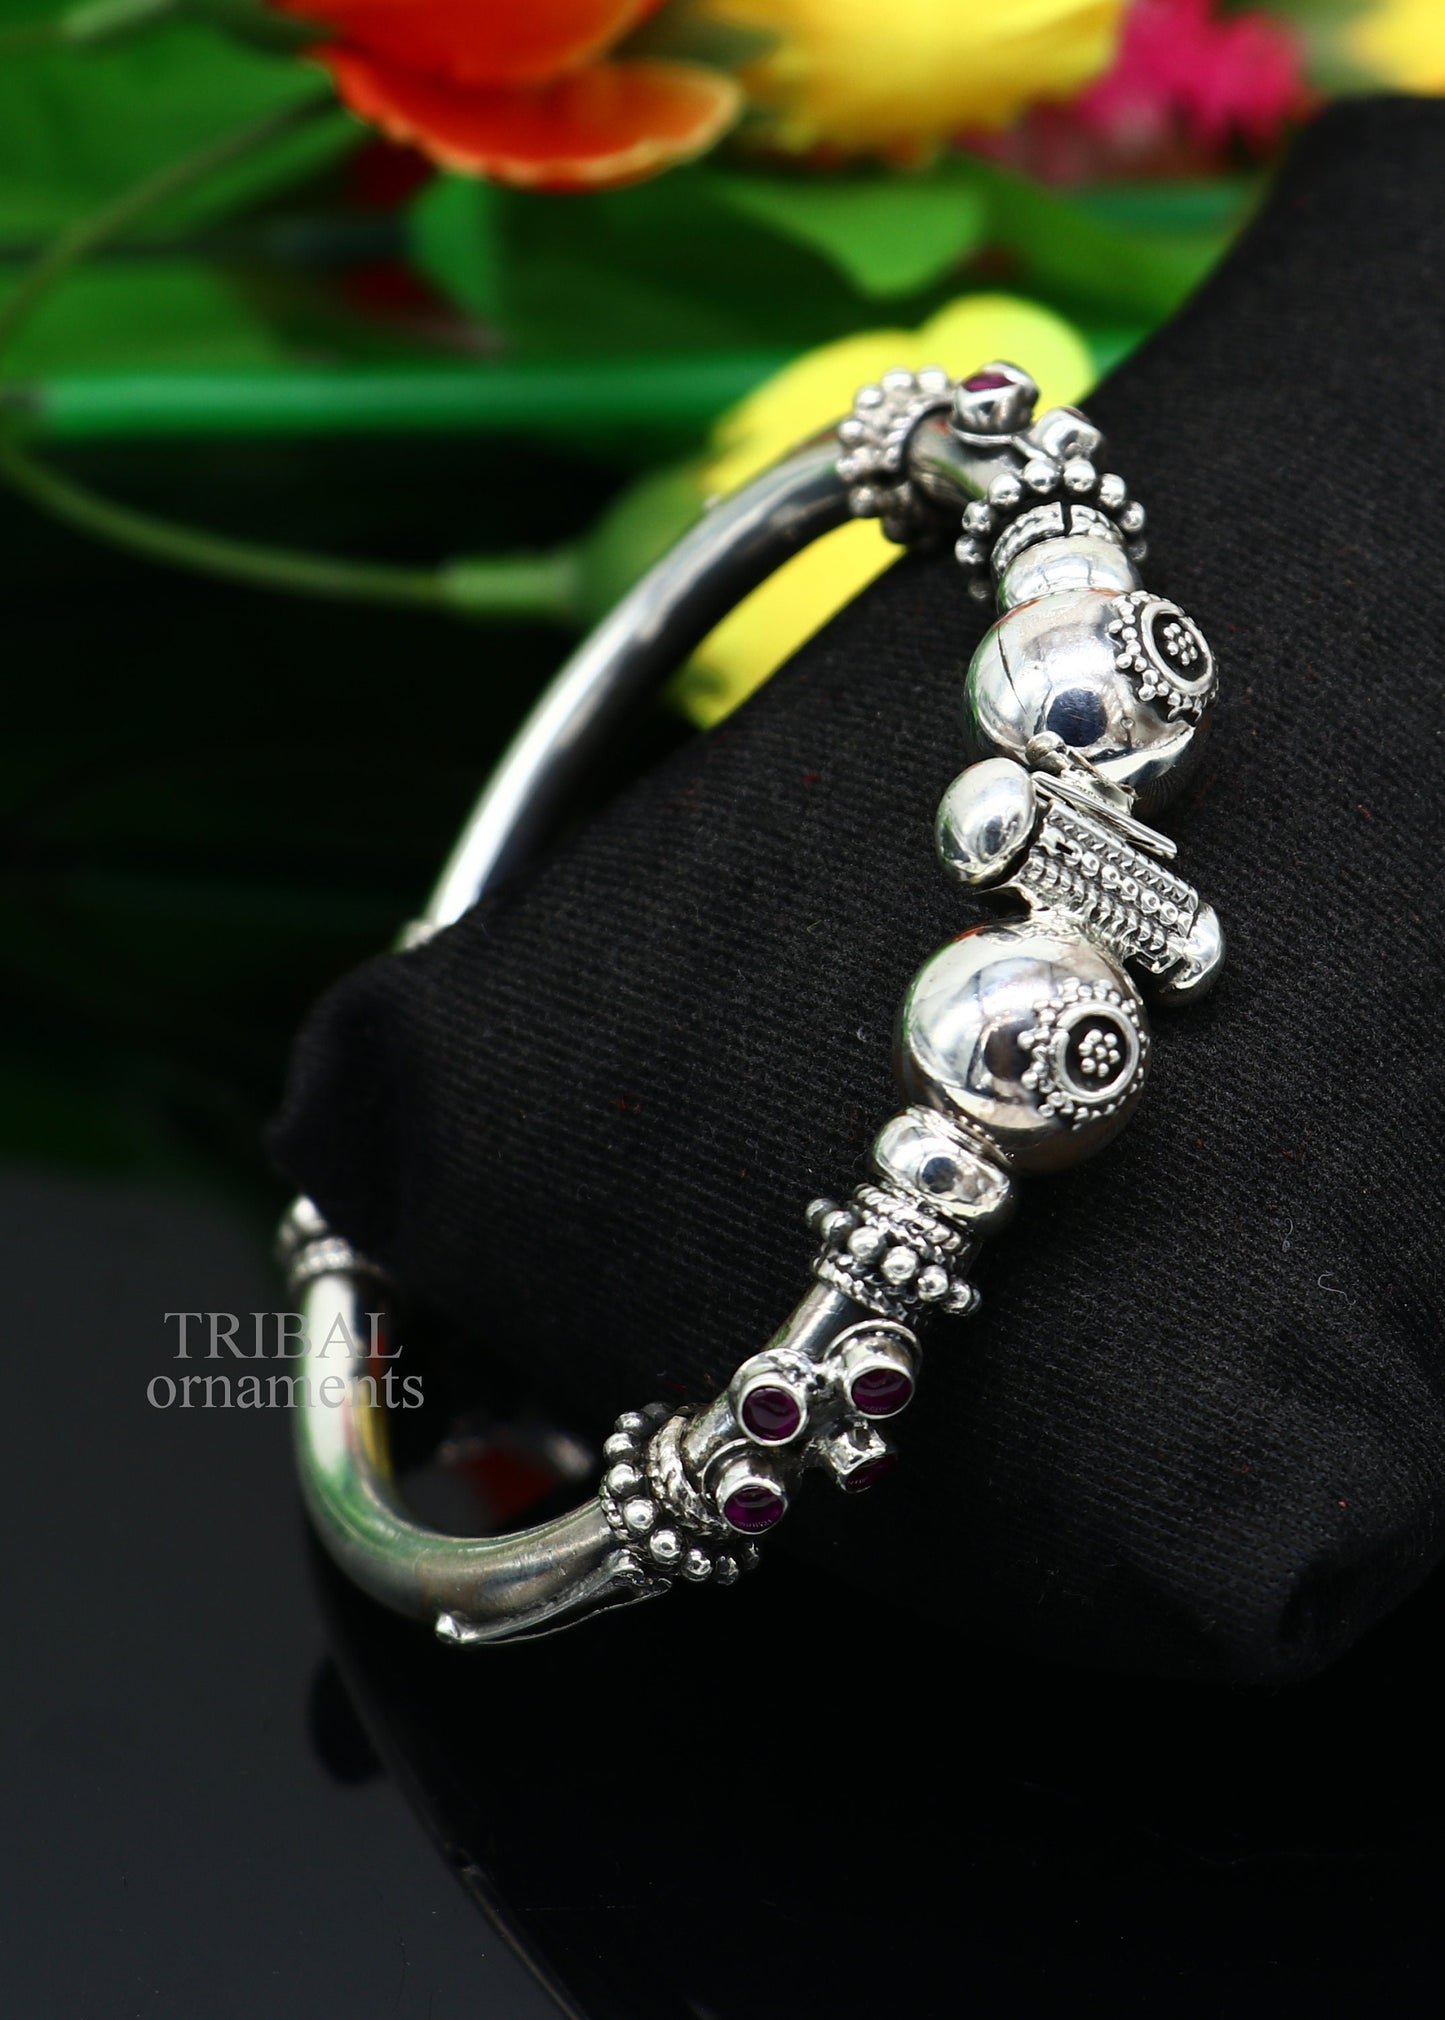 925 sterling silver vintage plain design handmade Unique stylish bangle bracelet kada cuff bracelet ethnic Banjara jewelry Rnsk481 - TRIBAL ORNAMENTS